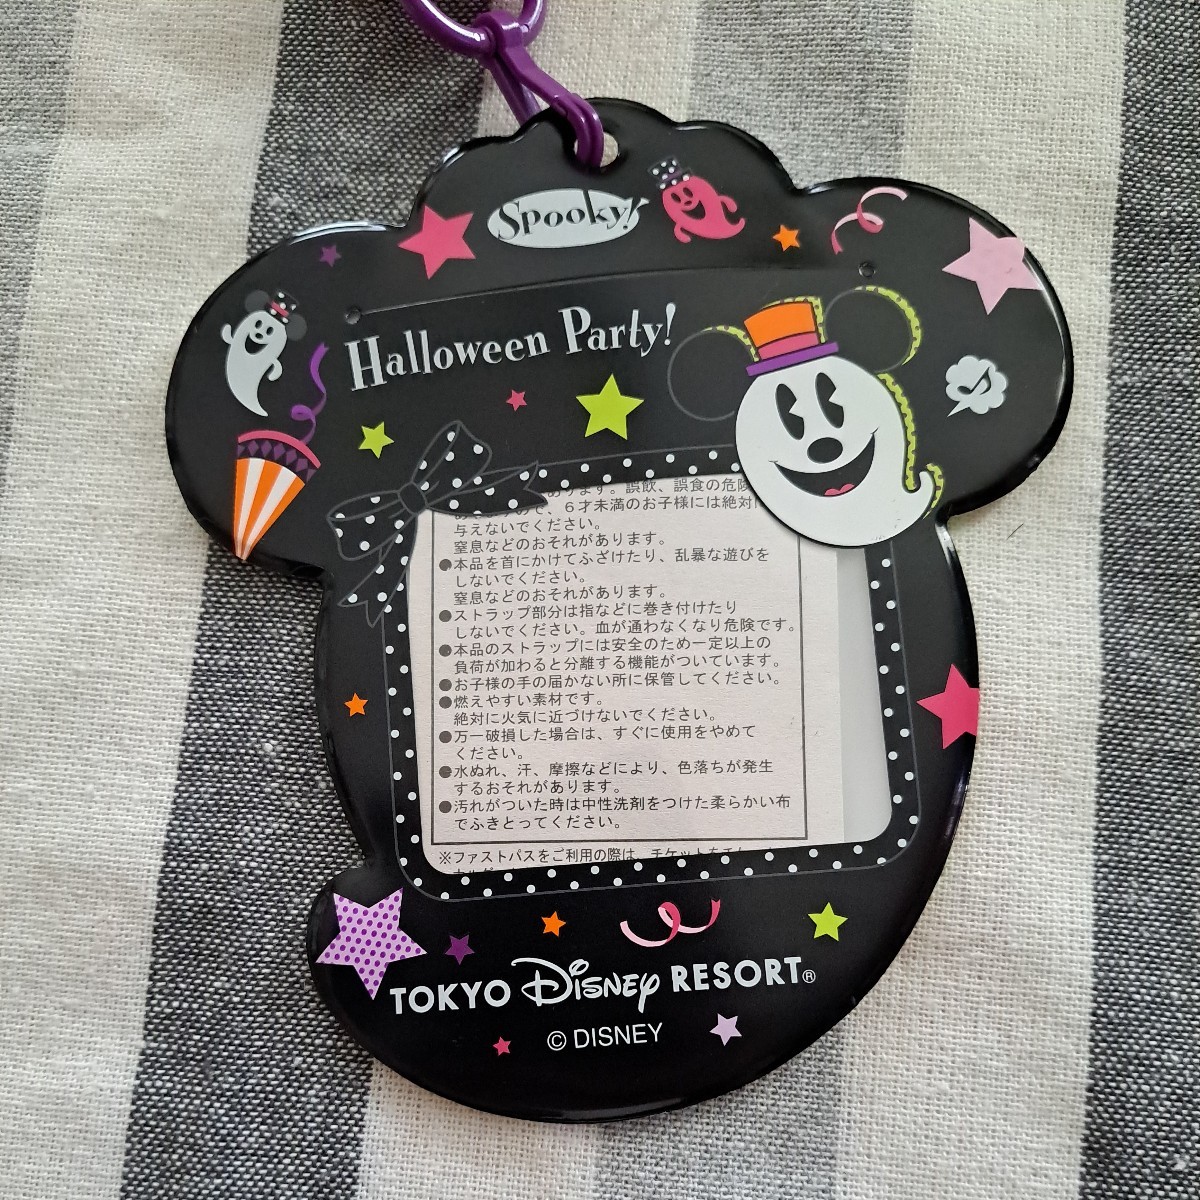 TOKYO Disney RESORT Halloween Party 2011 ネック パスケース セット / ディズニー ミッキー ミニー カードホルダー ハロウィン ファスト_画像7